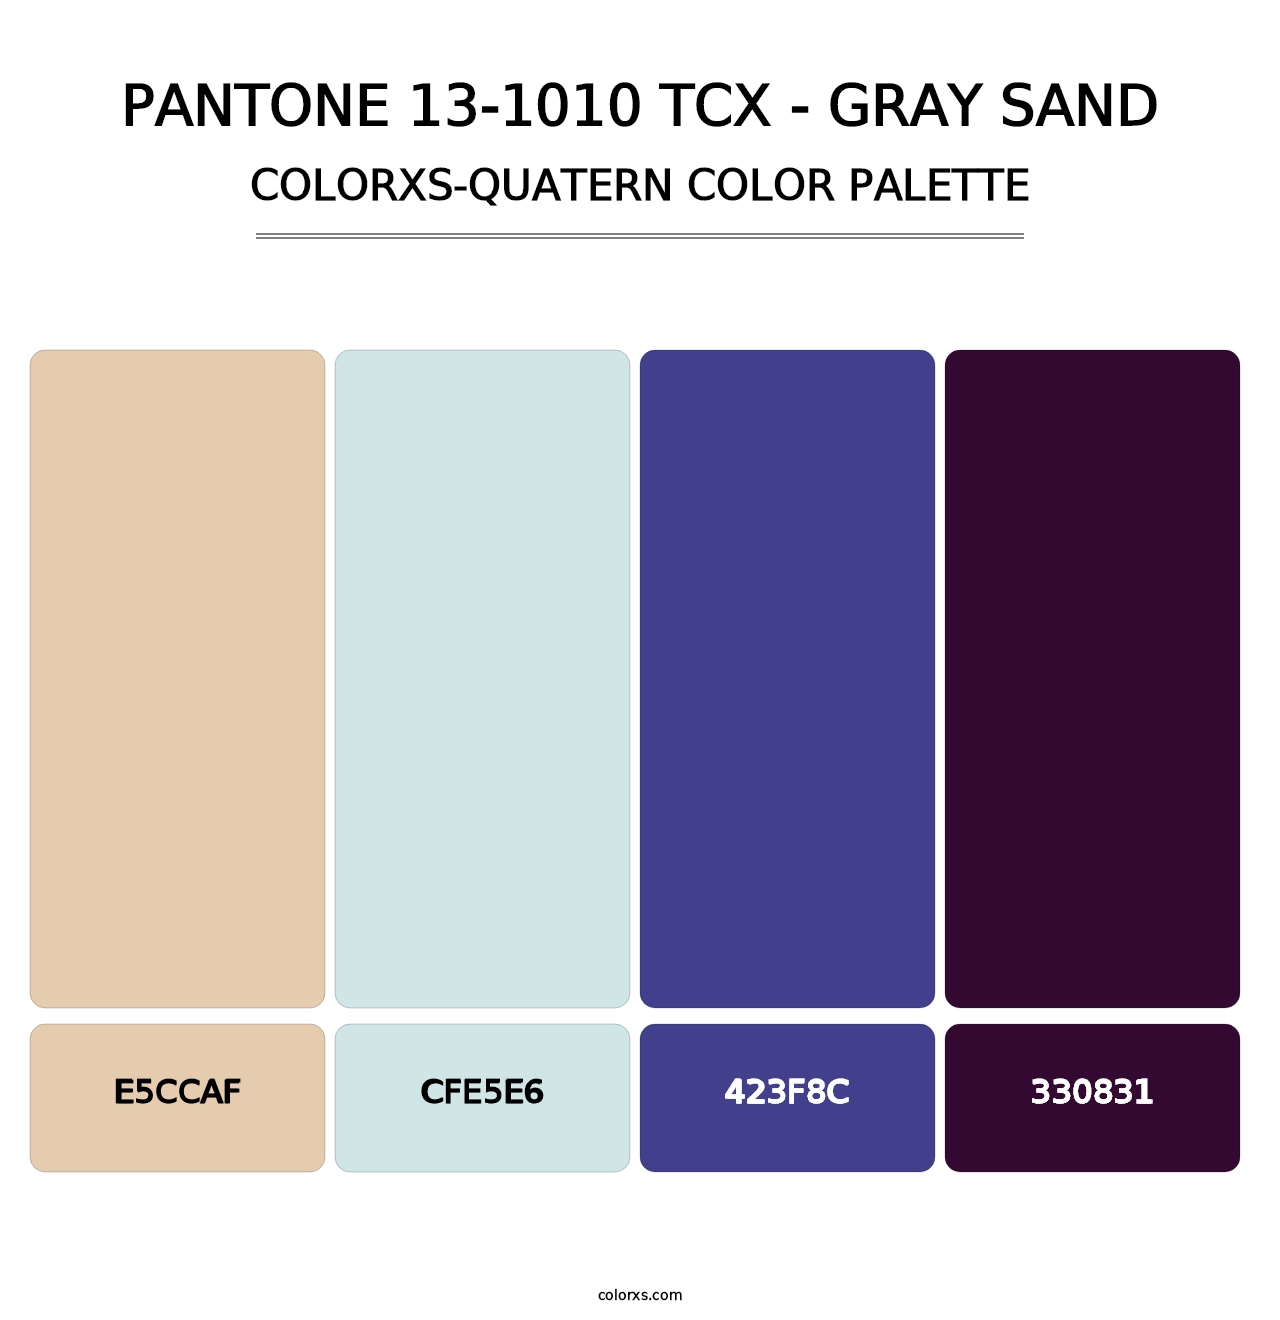 PANTONE 13-1010 TCX - Gray Sand - Colorxs Quatern Palette